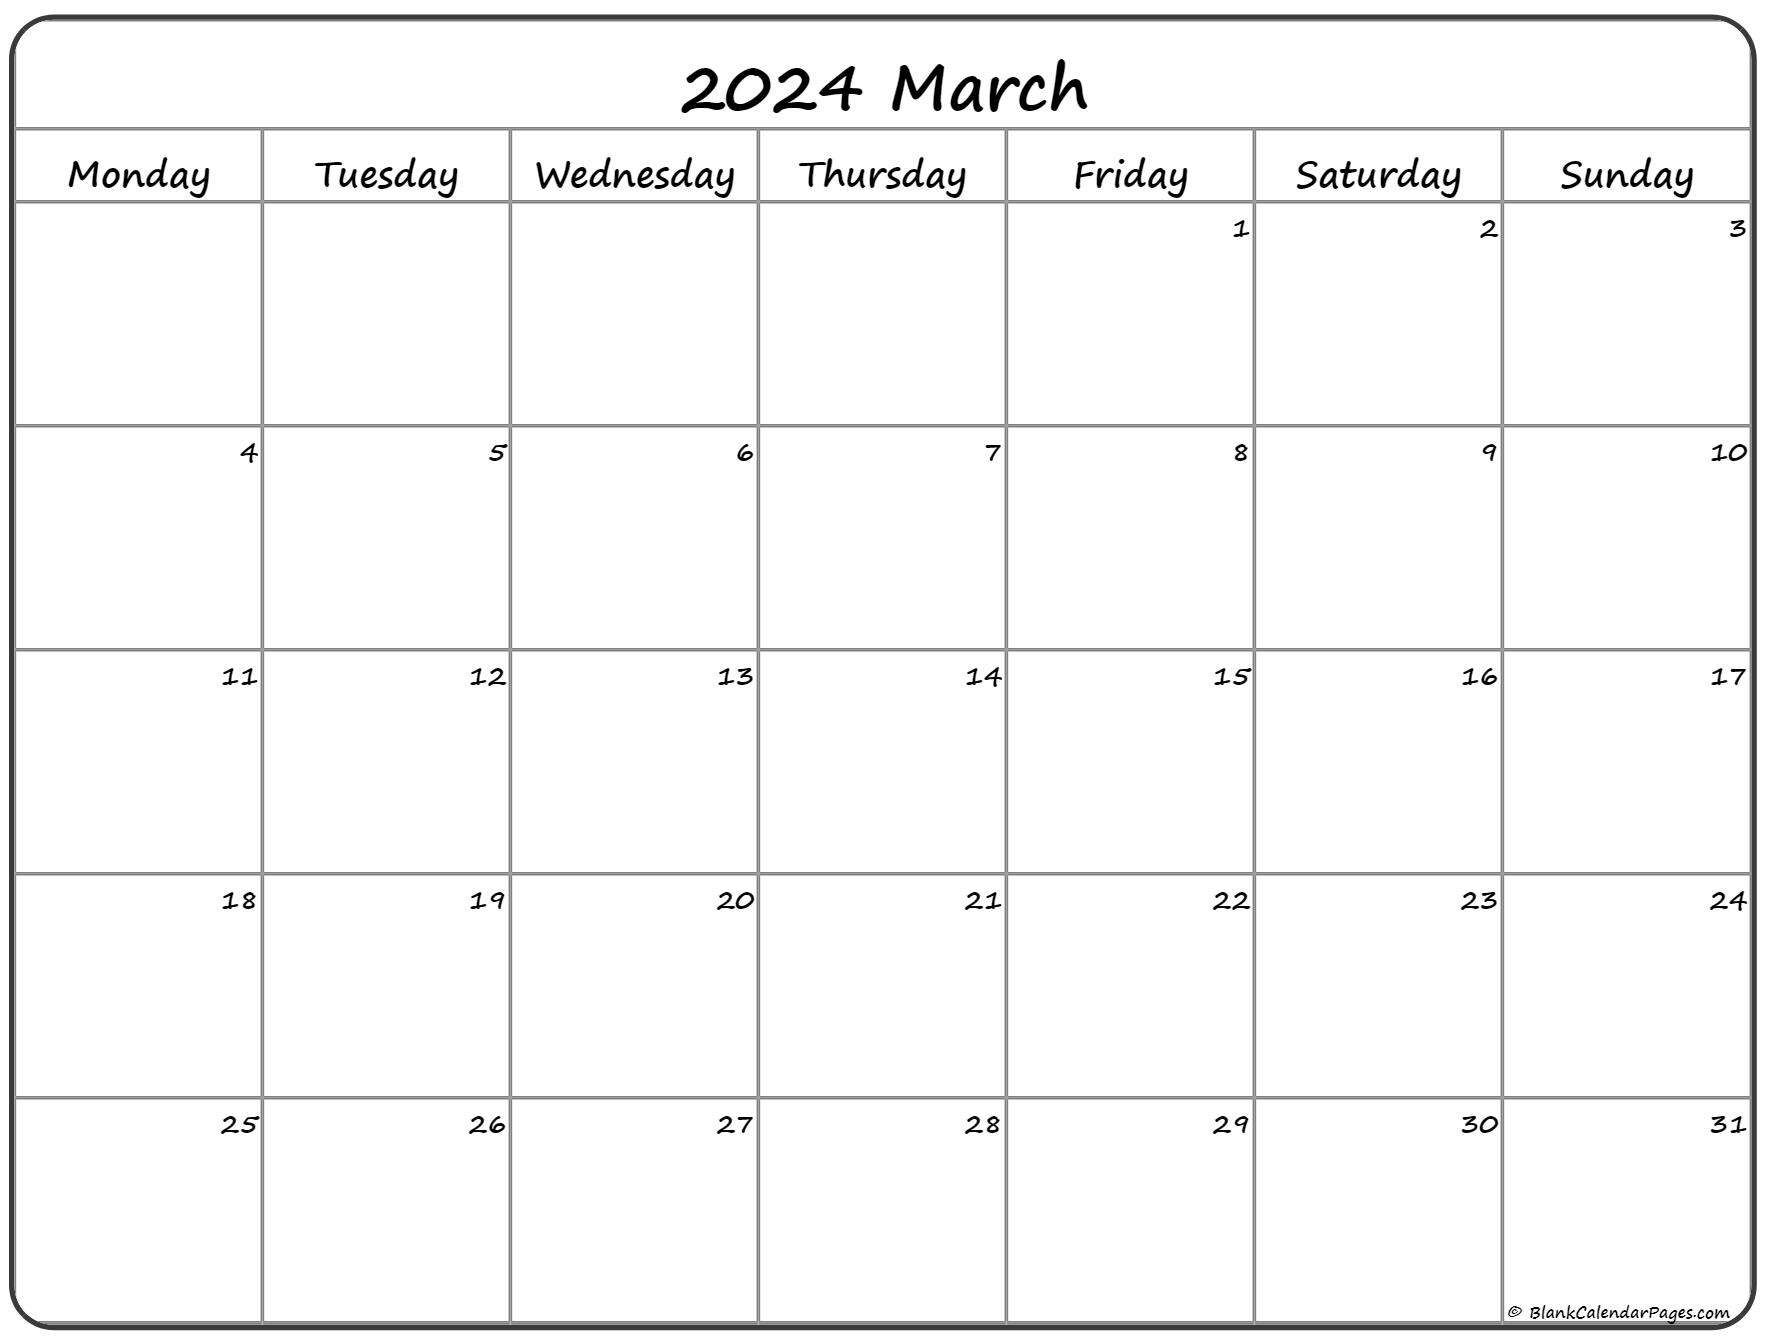 March 2023 Monday Calendar | Monday To Sunday